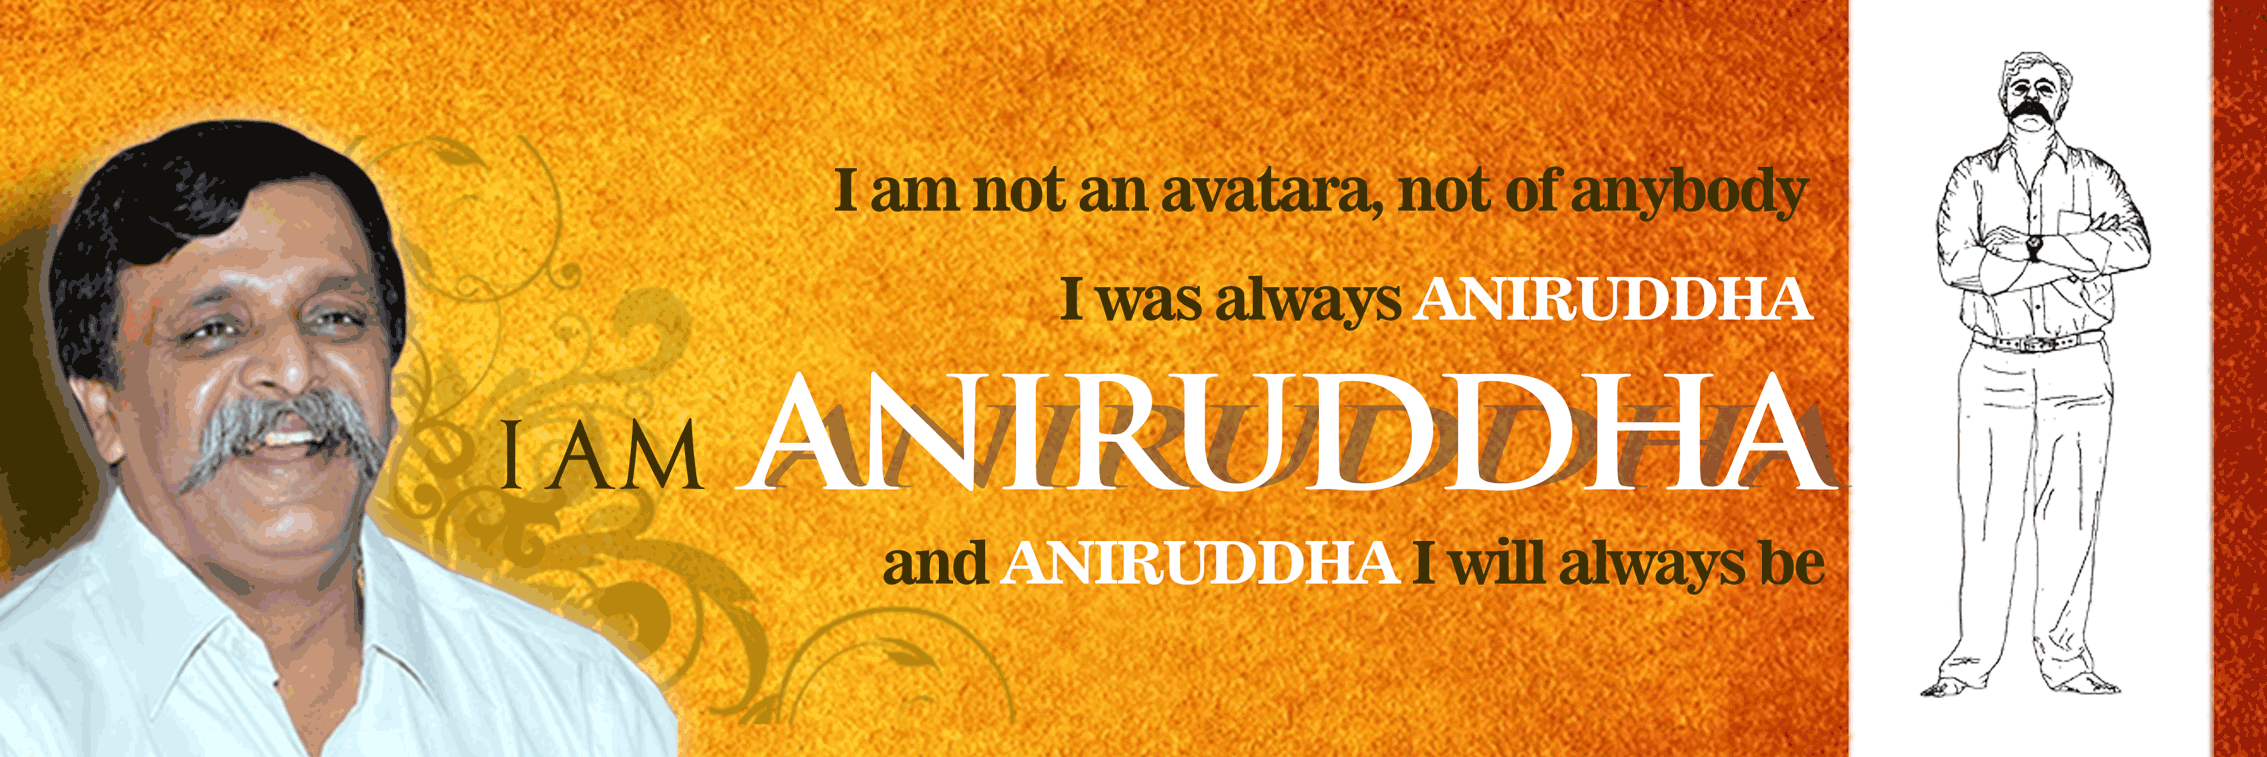 AniruddhaFoundation - I am Aniruddha